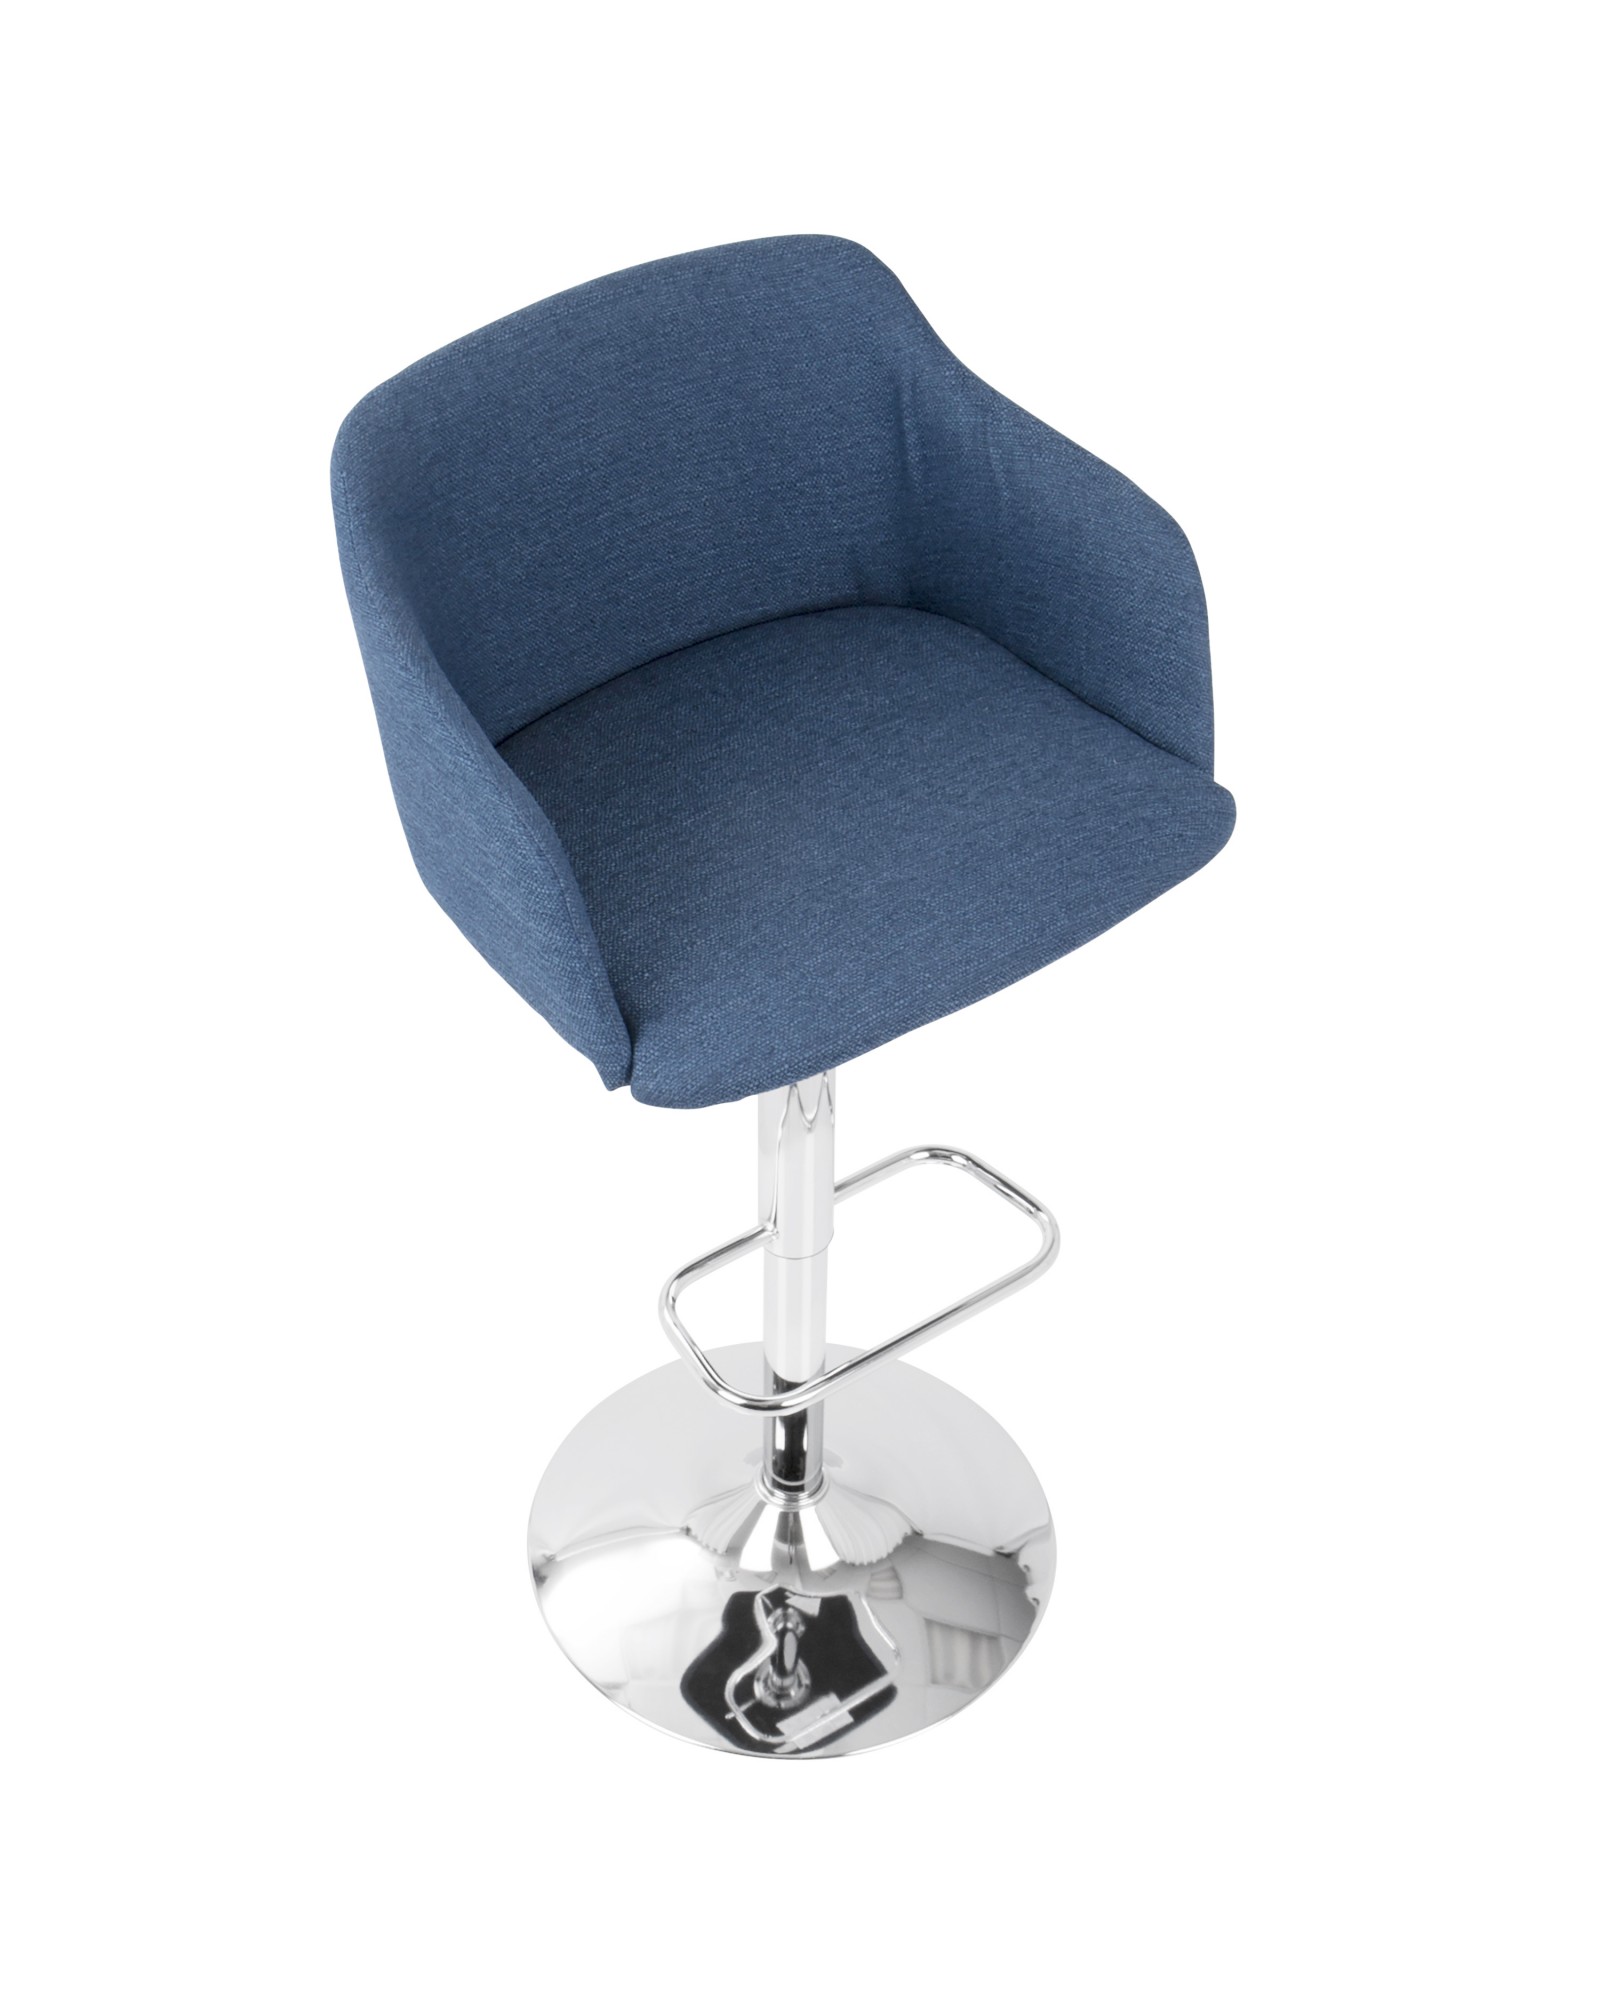 Daniella Contemporary Adjustable Barstool with Swivel in Blue